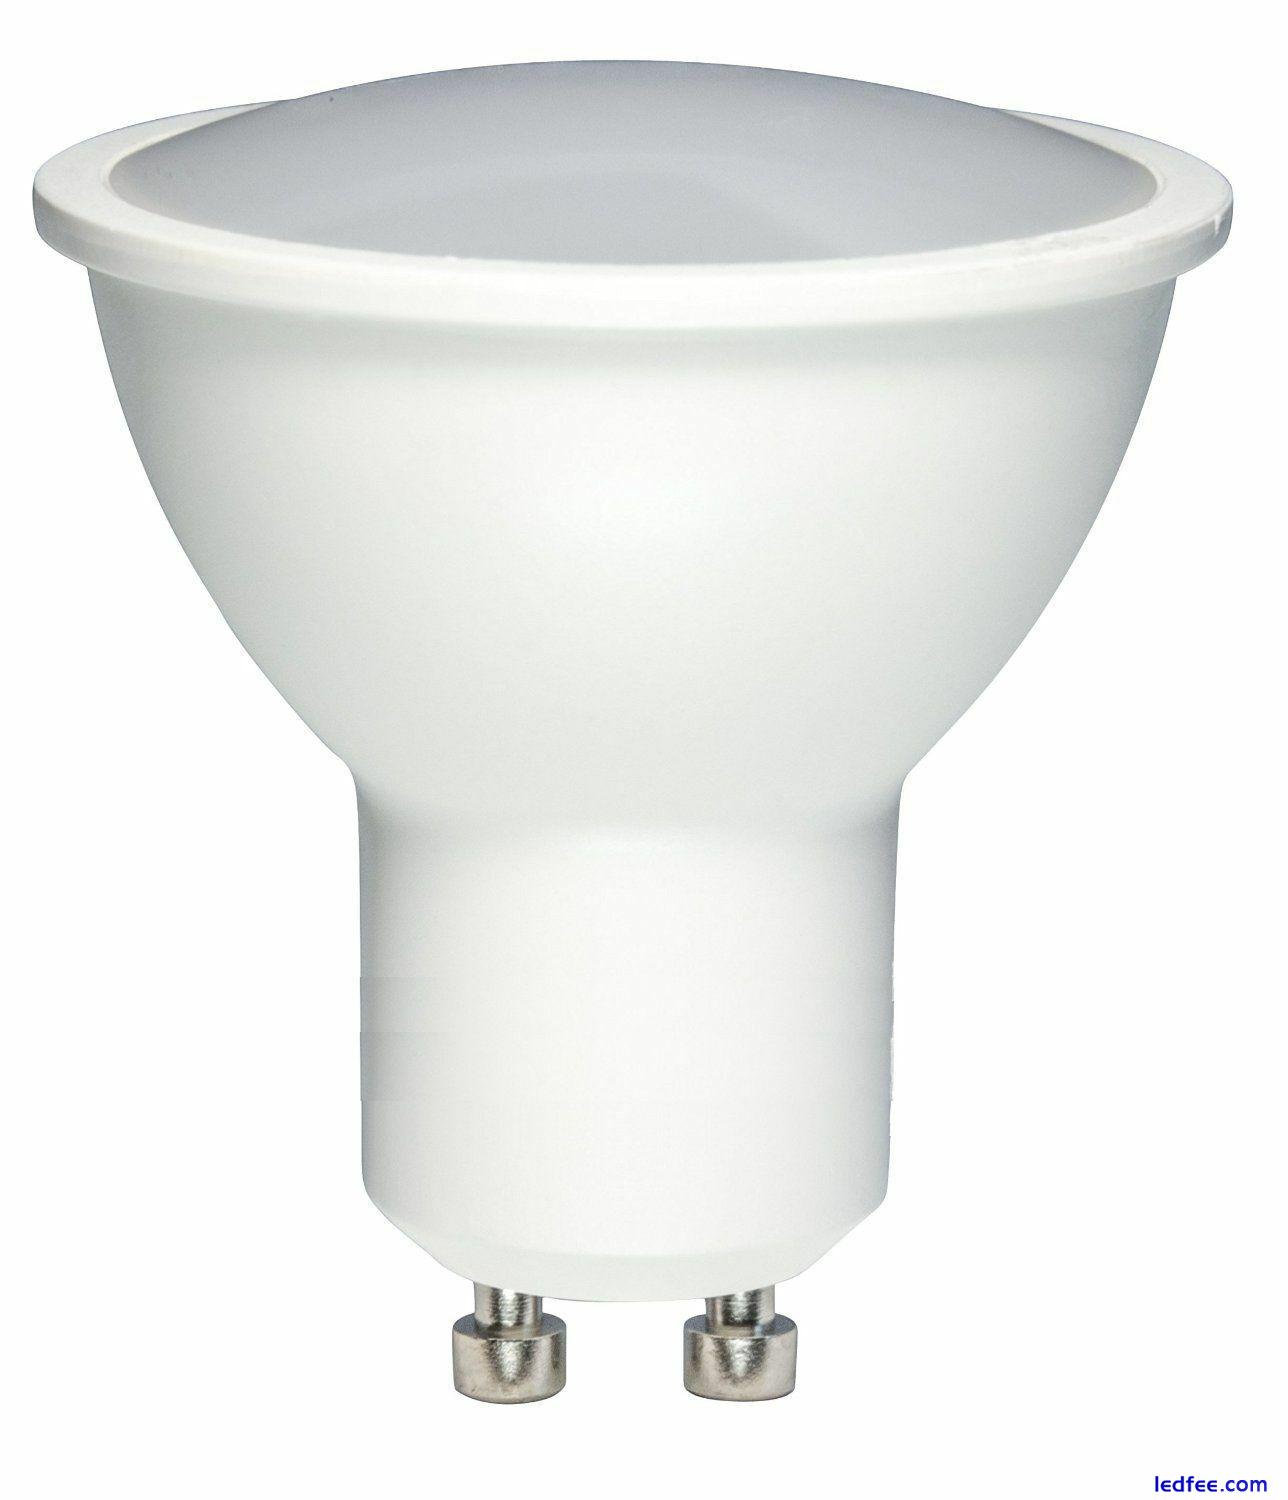 12x GU10 7W LED Light Bulb Spotlight Lamp Cool white 6500K Equals 70W Halogen 0 